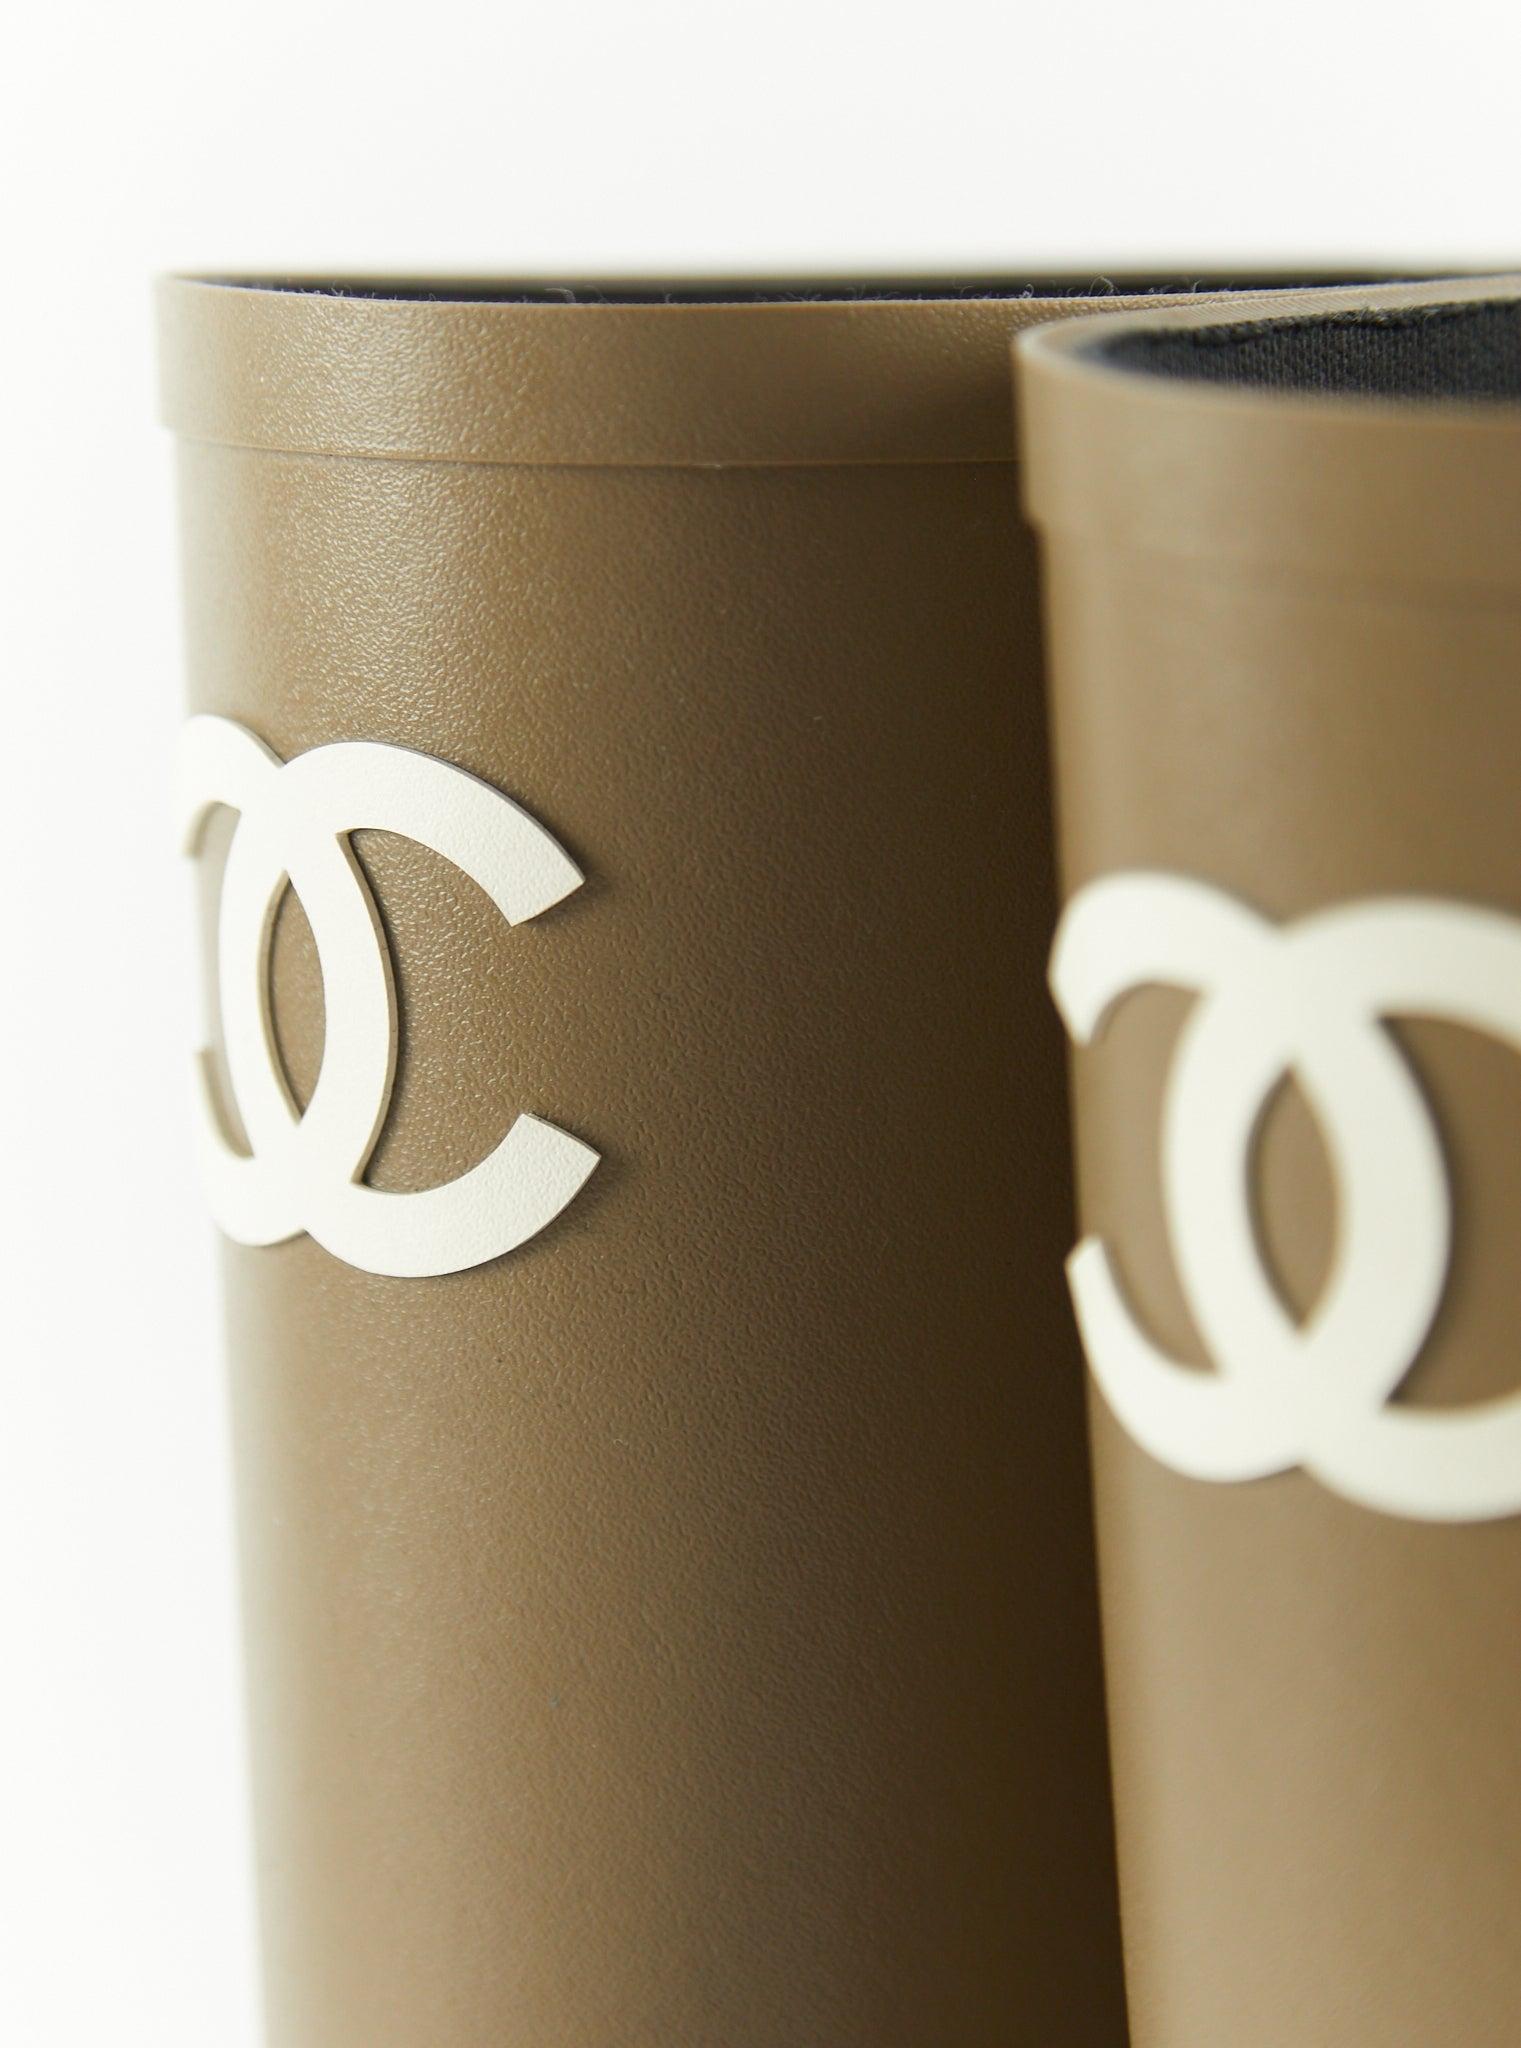 Chanel Wellies in Khaki

Heel height: 25 mm 

Size 39